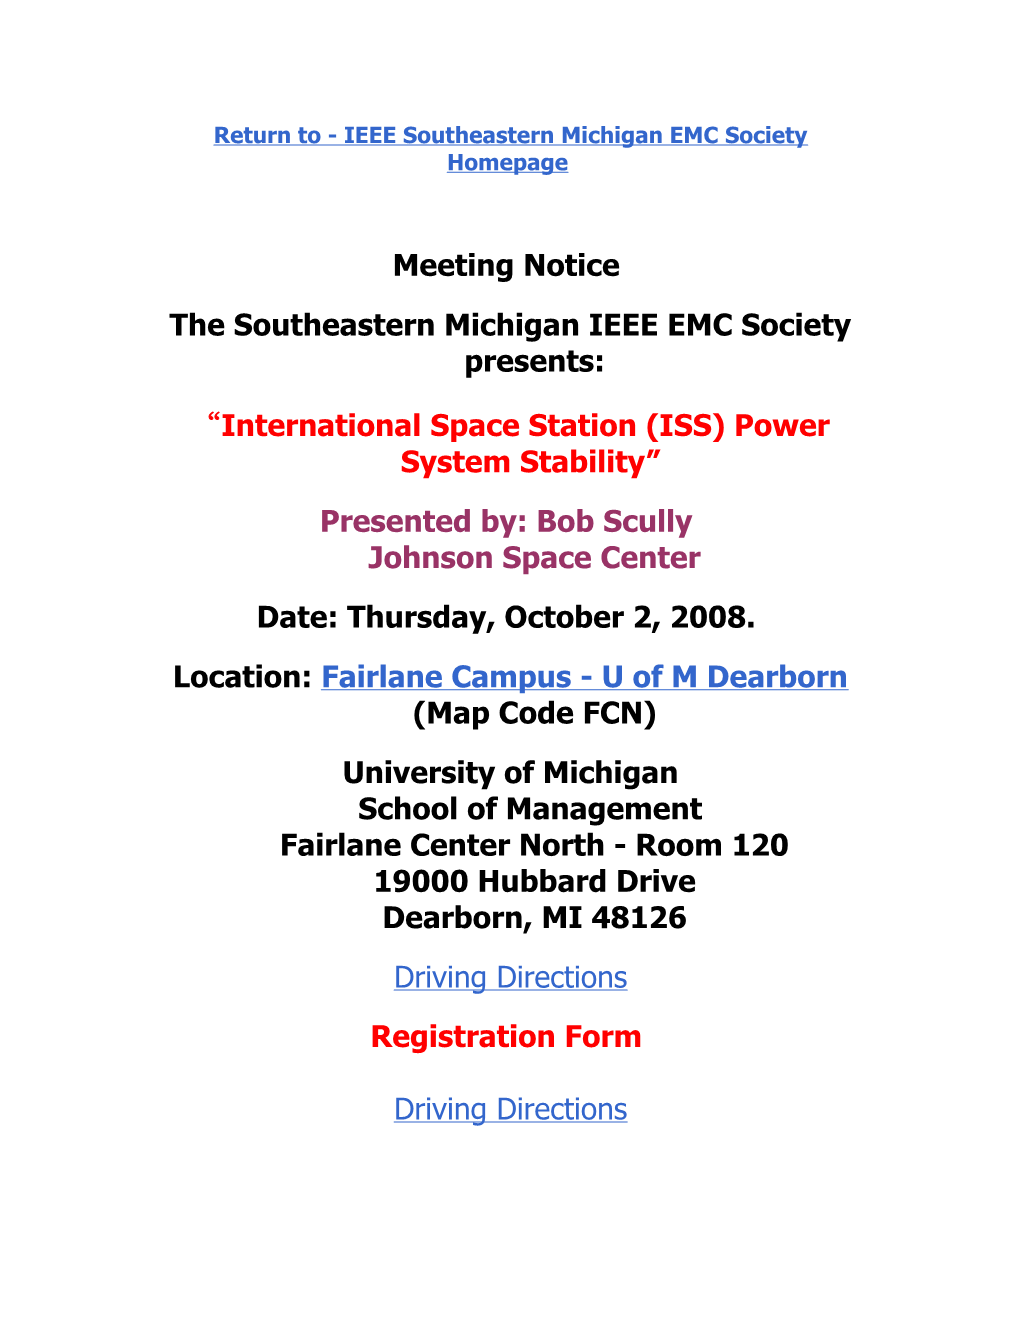 IEEE Southeastern Michigan EMC Society - Bob Scully